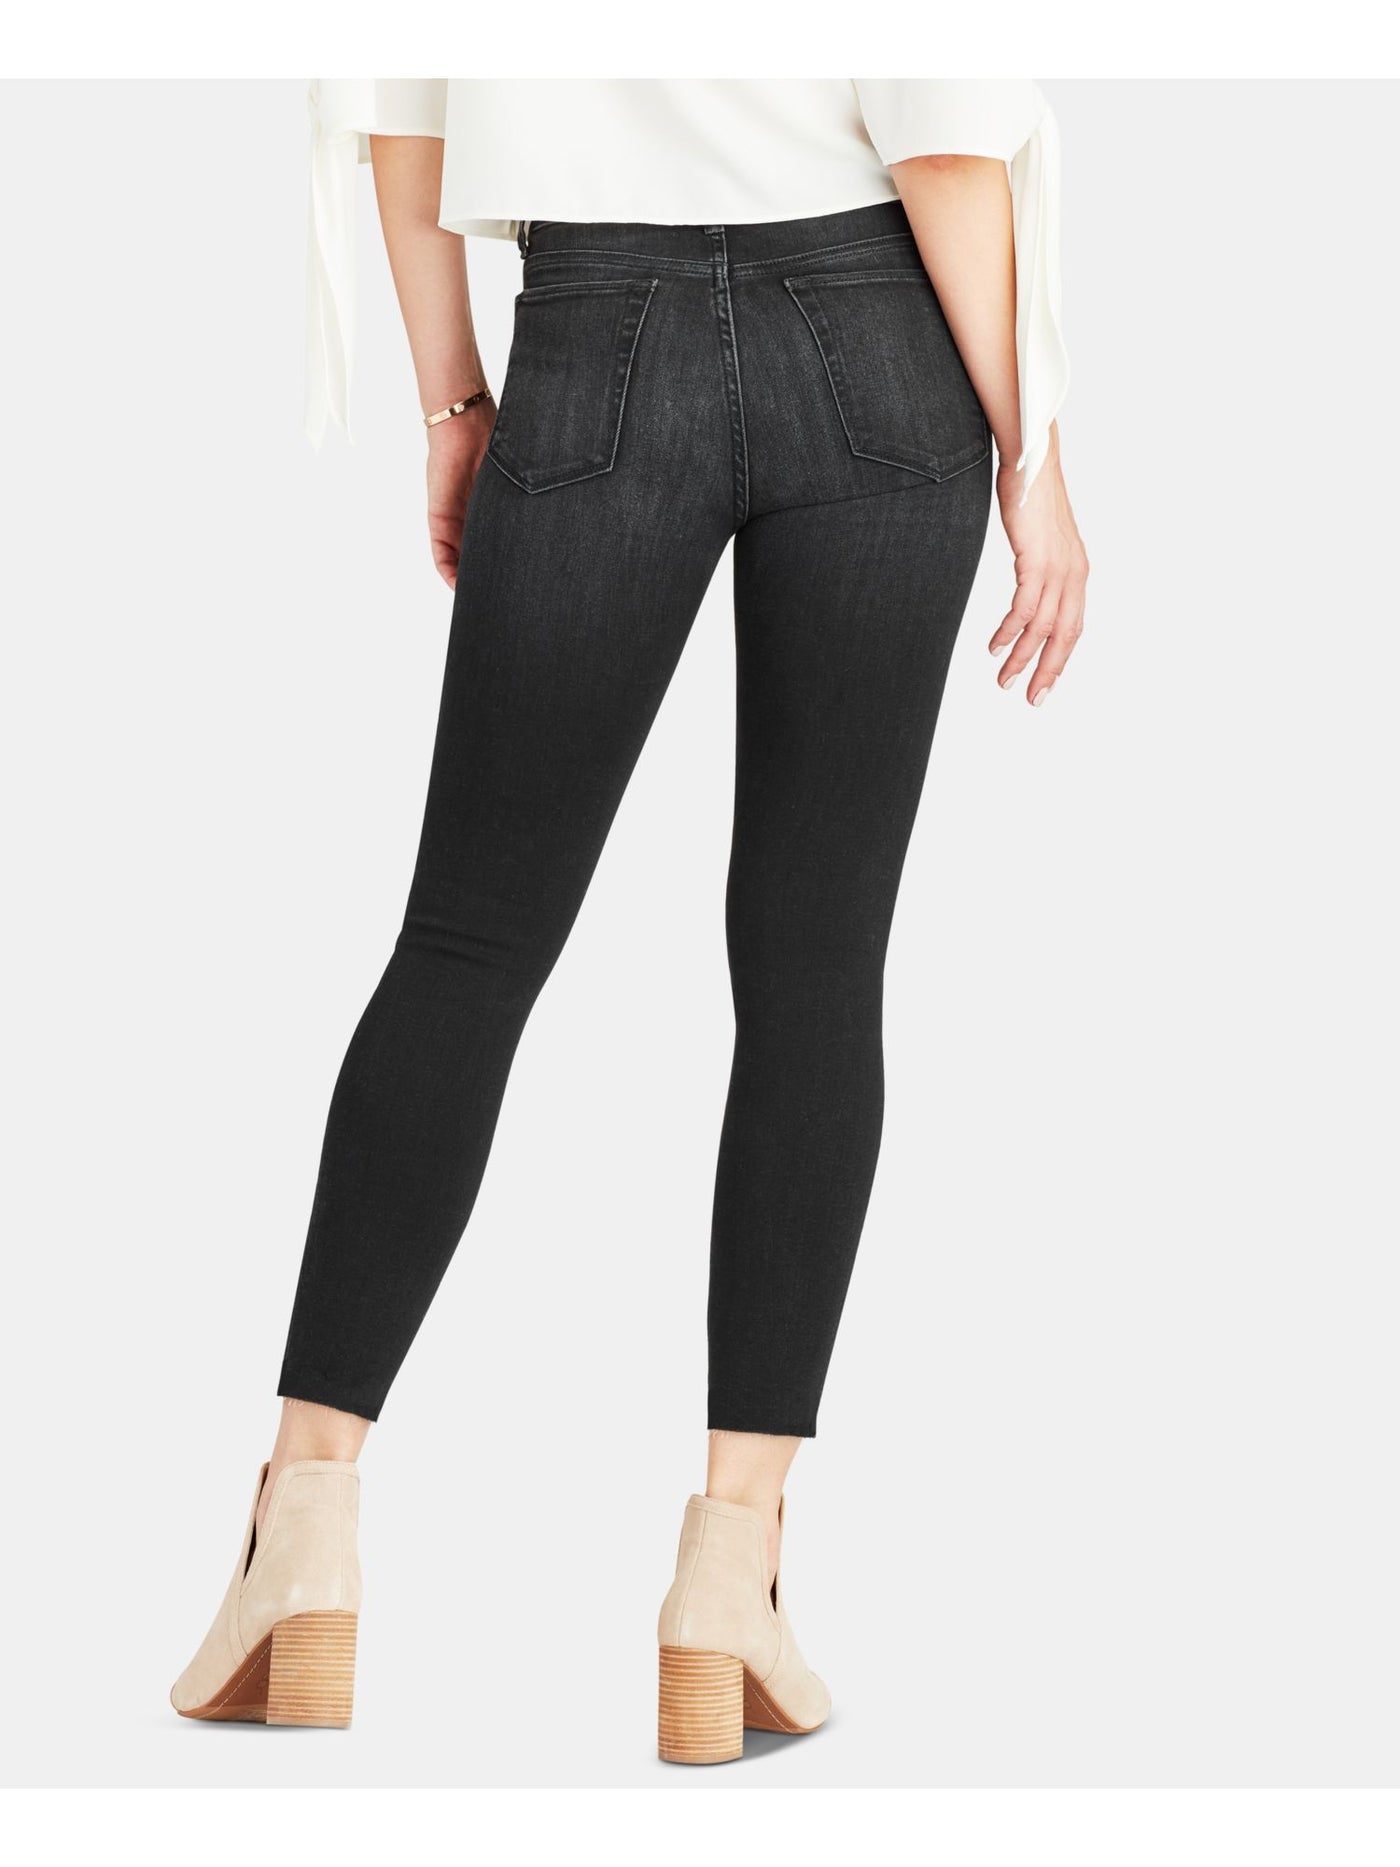 JOE'S Womens Black Skinny Jeans Size: 25 Waist